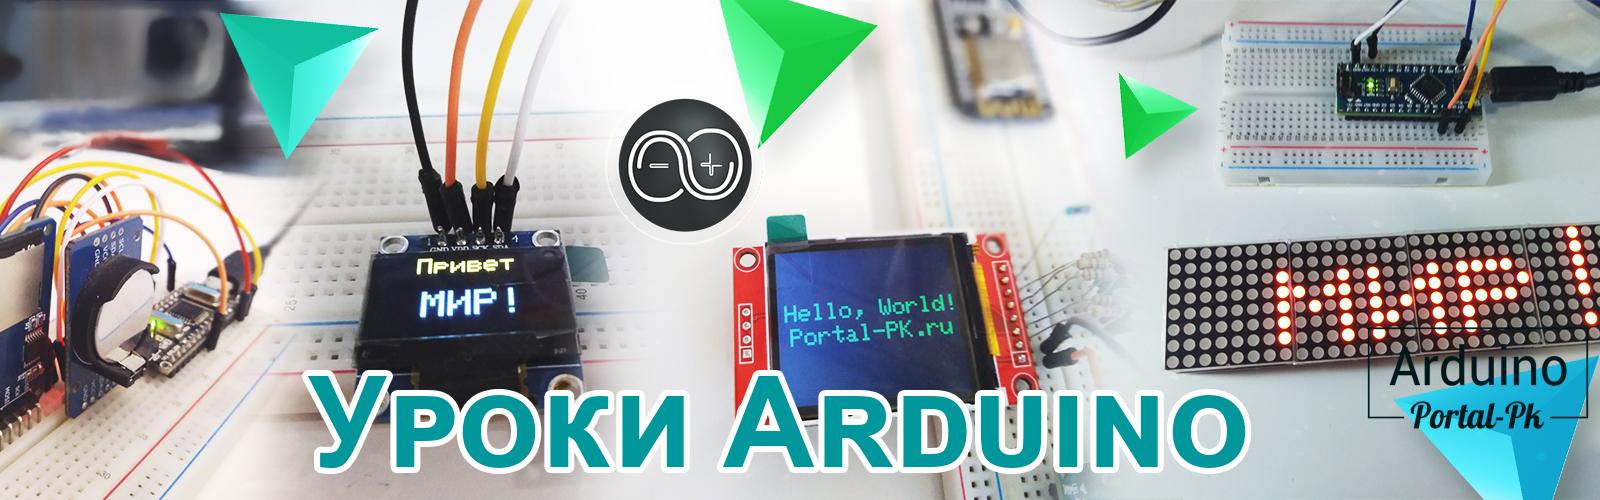 Уроки Arduino на Portal-PK